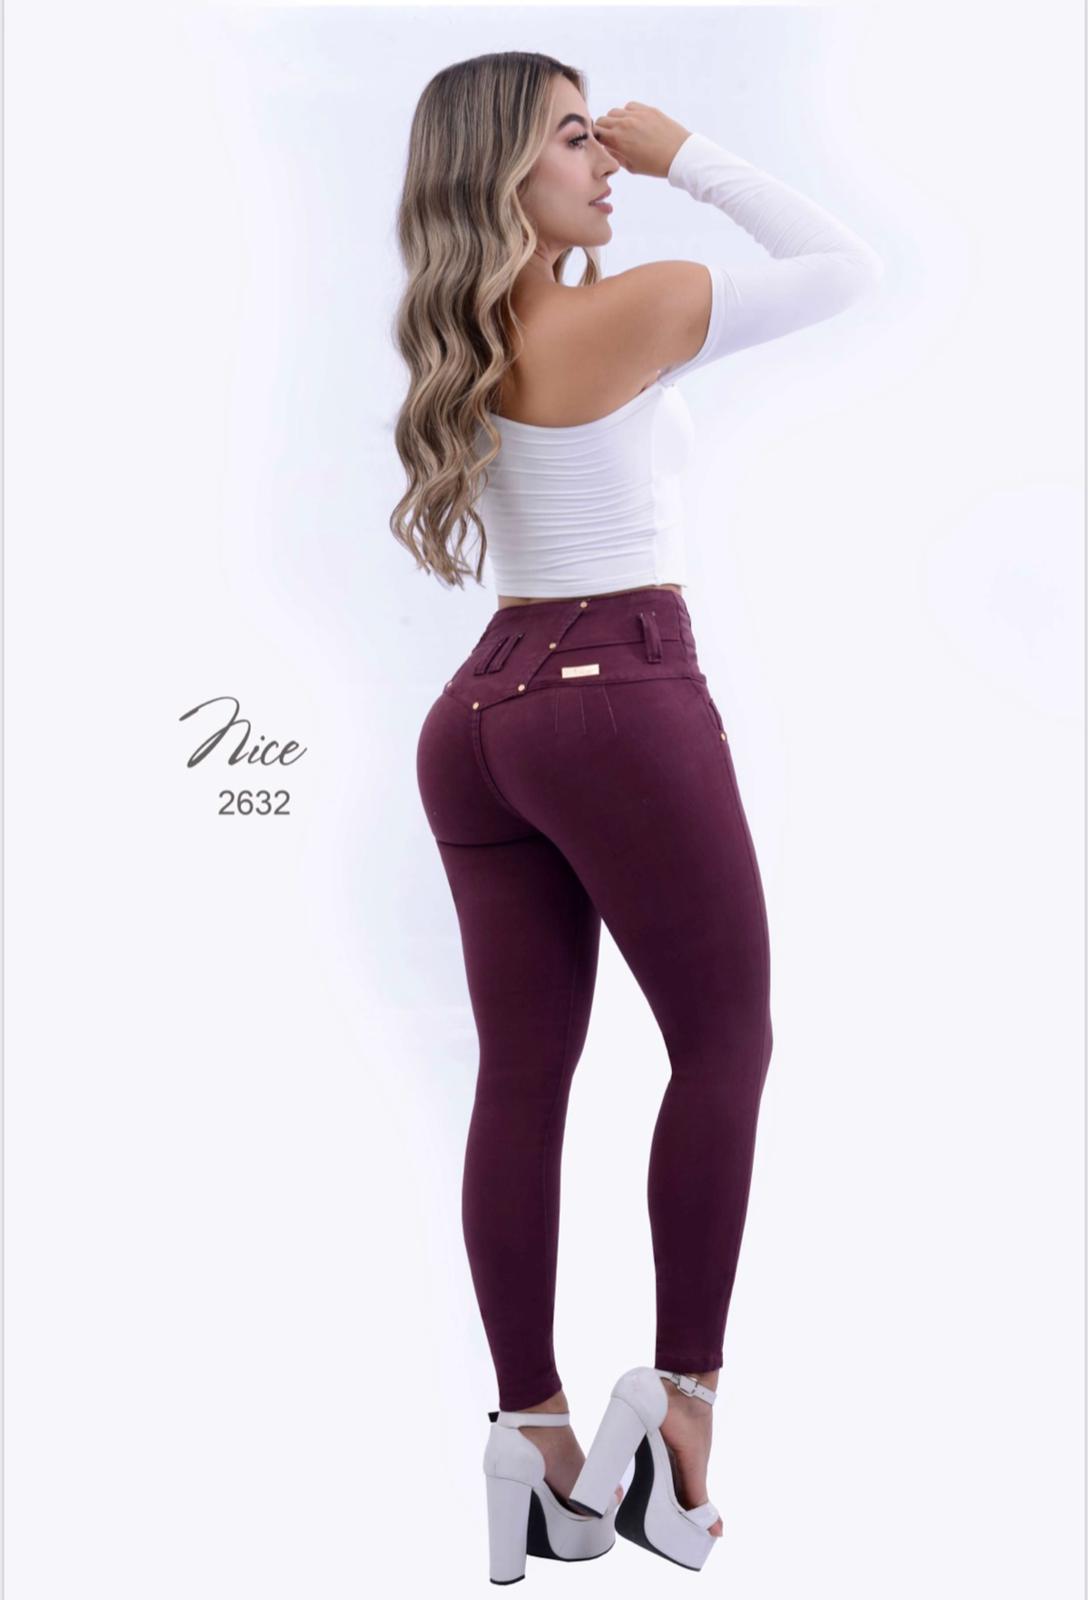 Zephyr's Colombian Jeans Levantacola